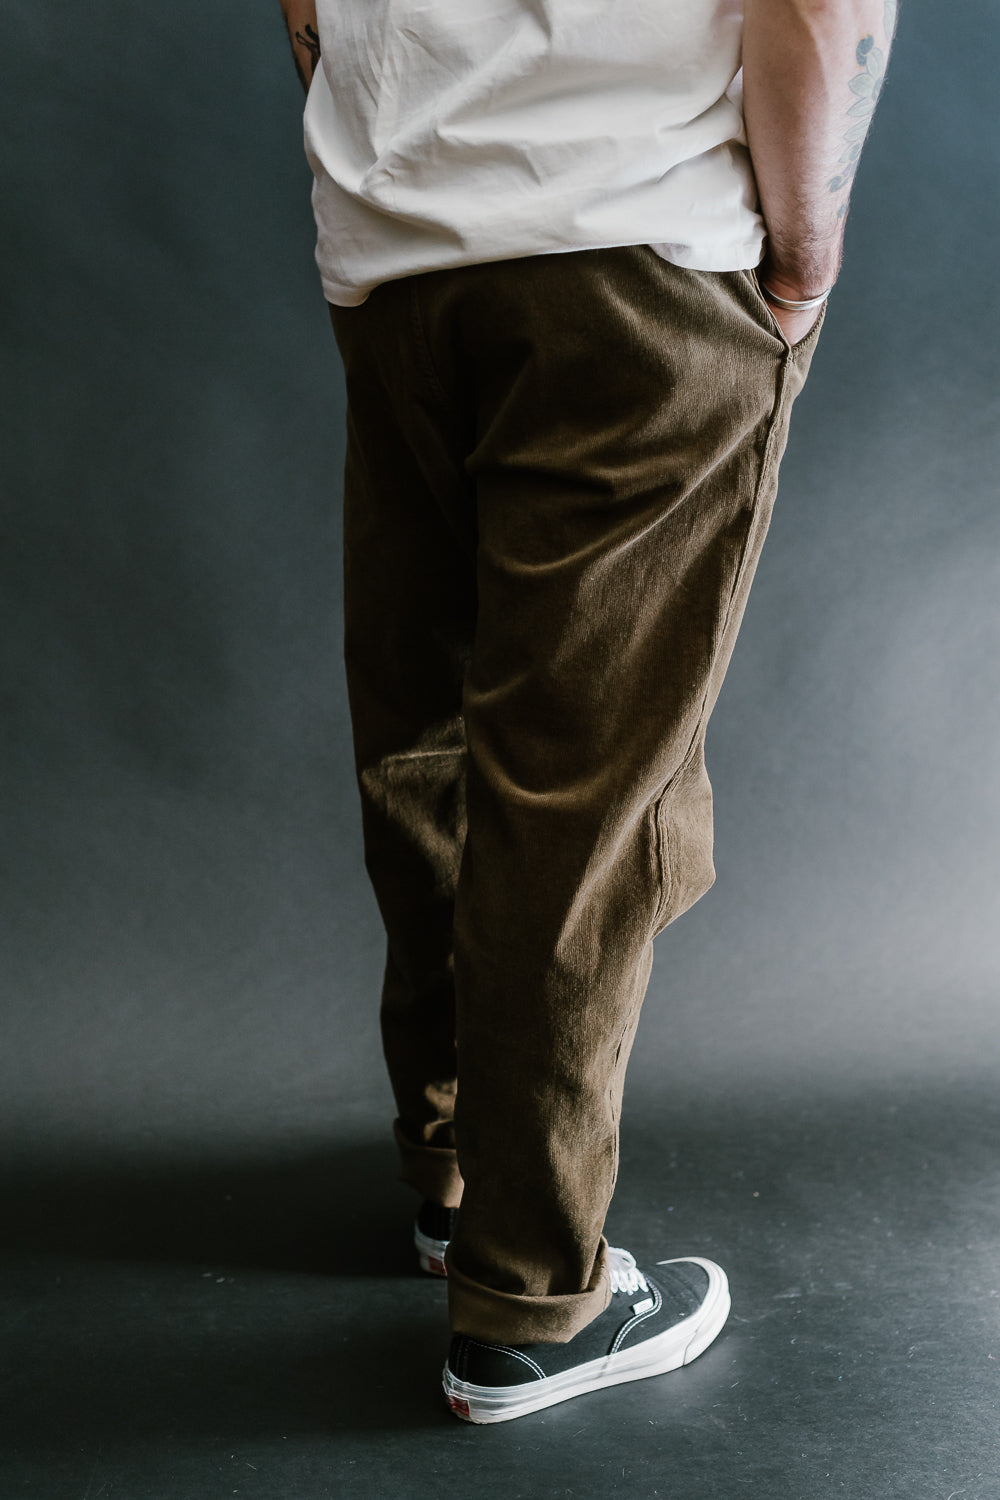 03-1002-C71 - New Yorker Pant Stretch Corduroy - Light Gray